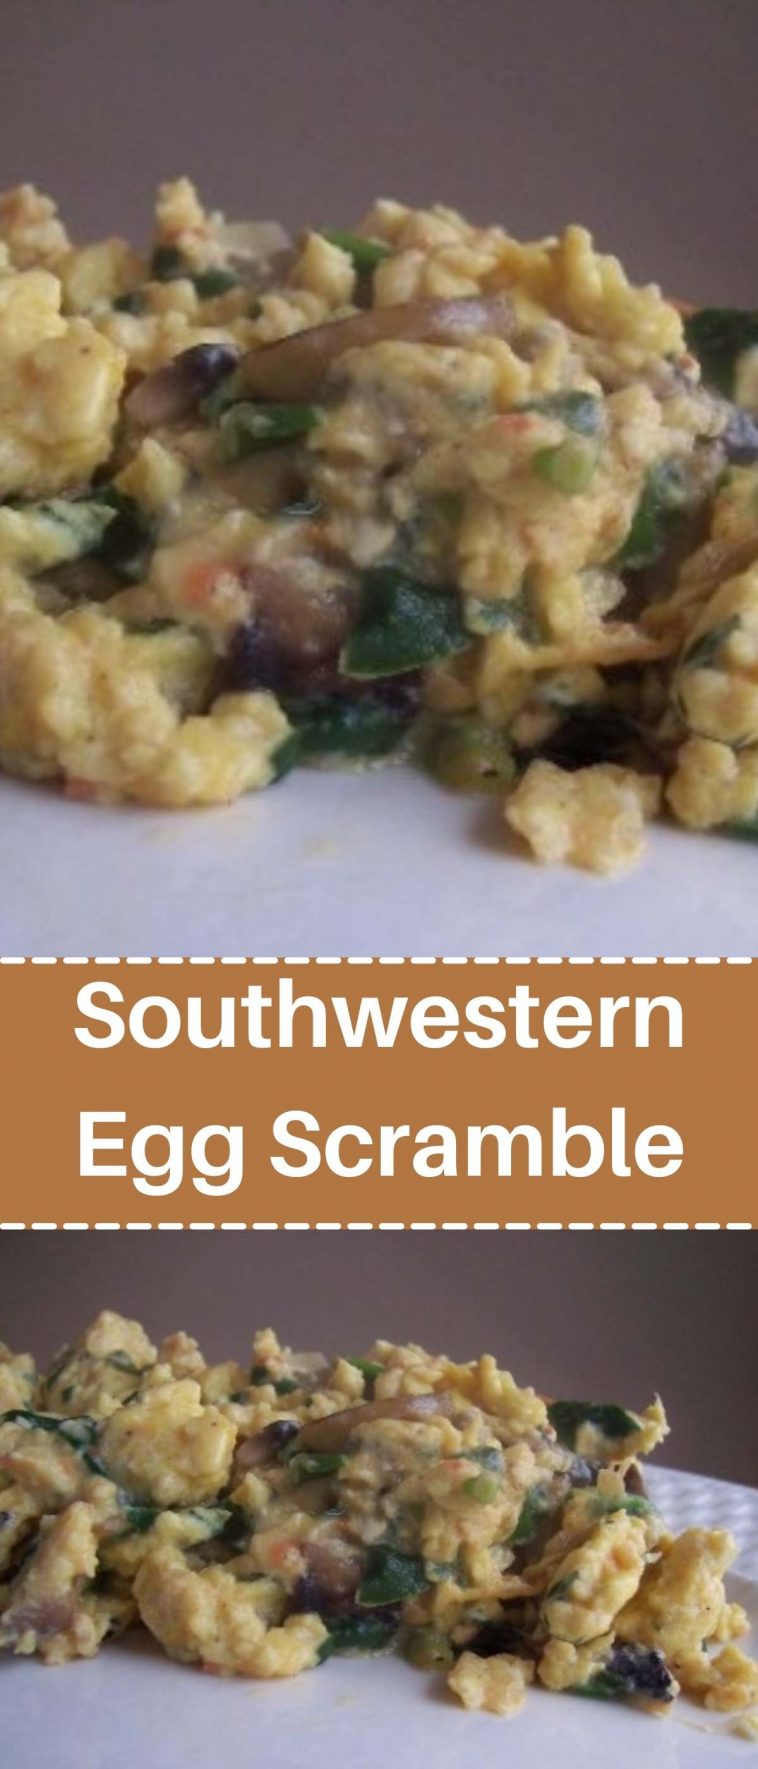 Southwestern Egg Scramble